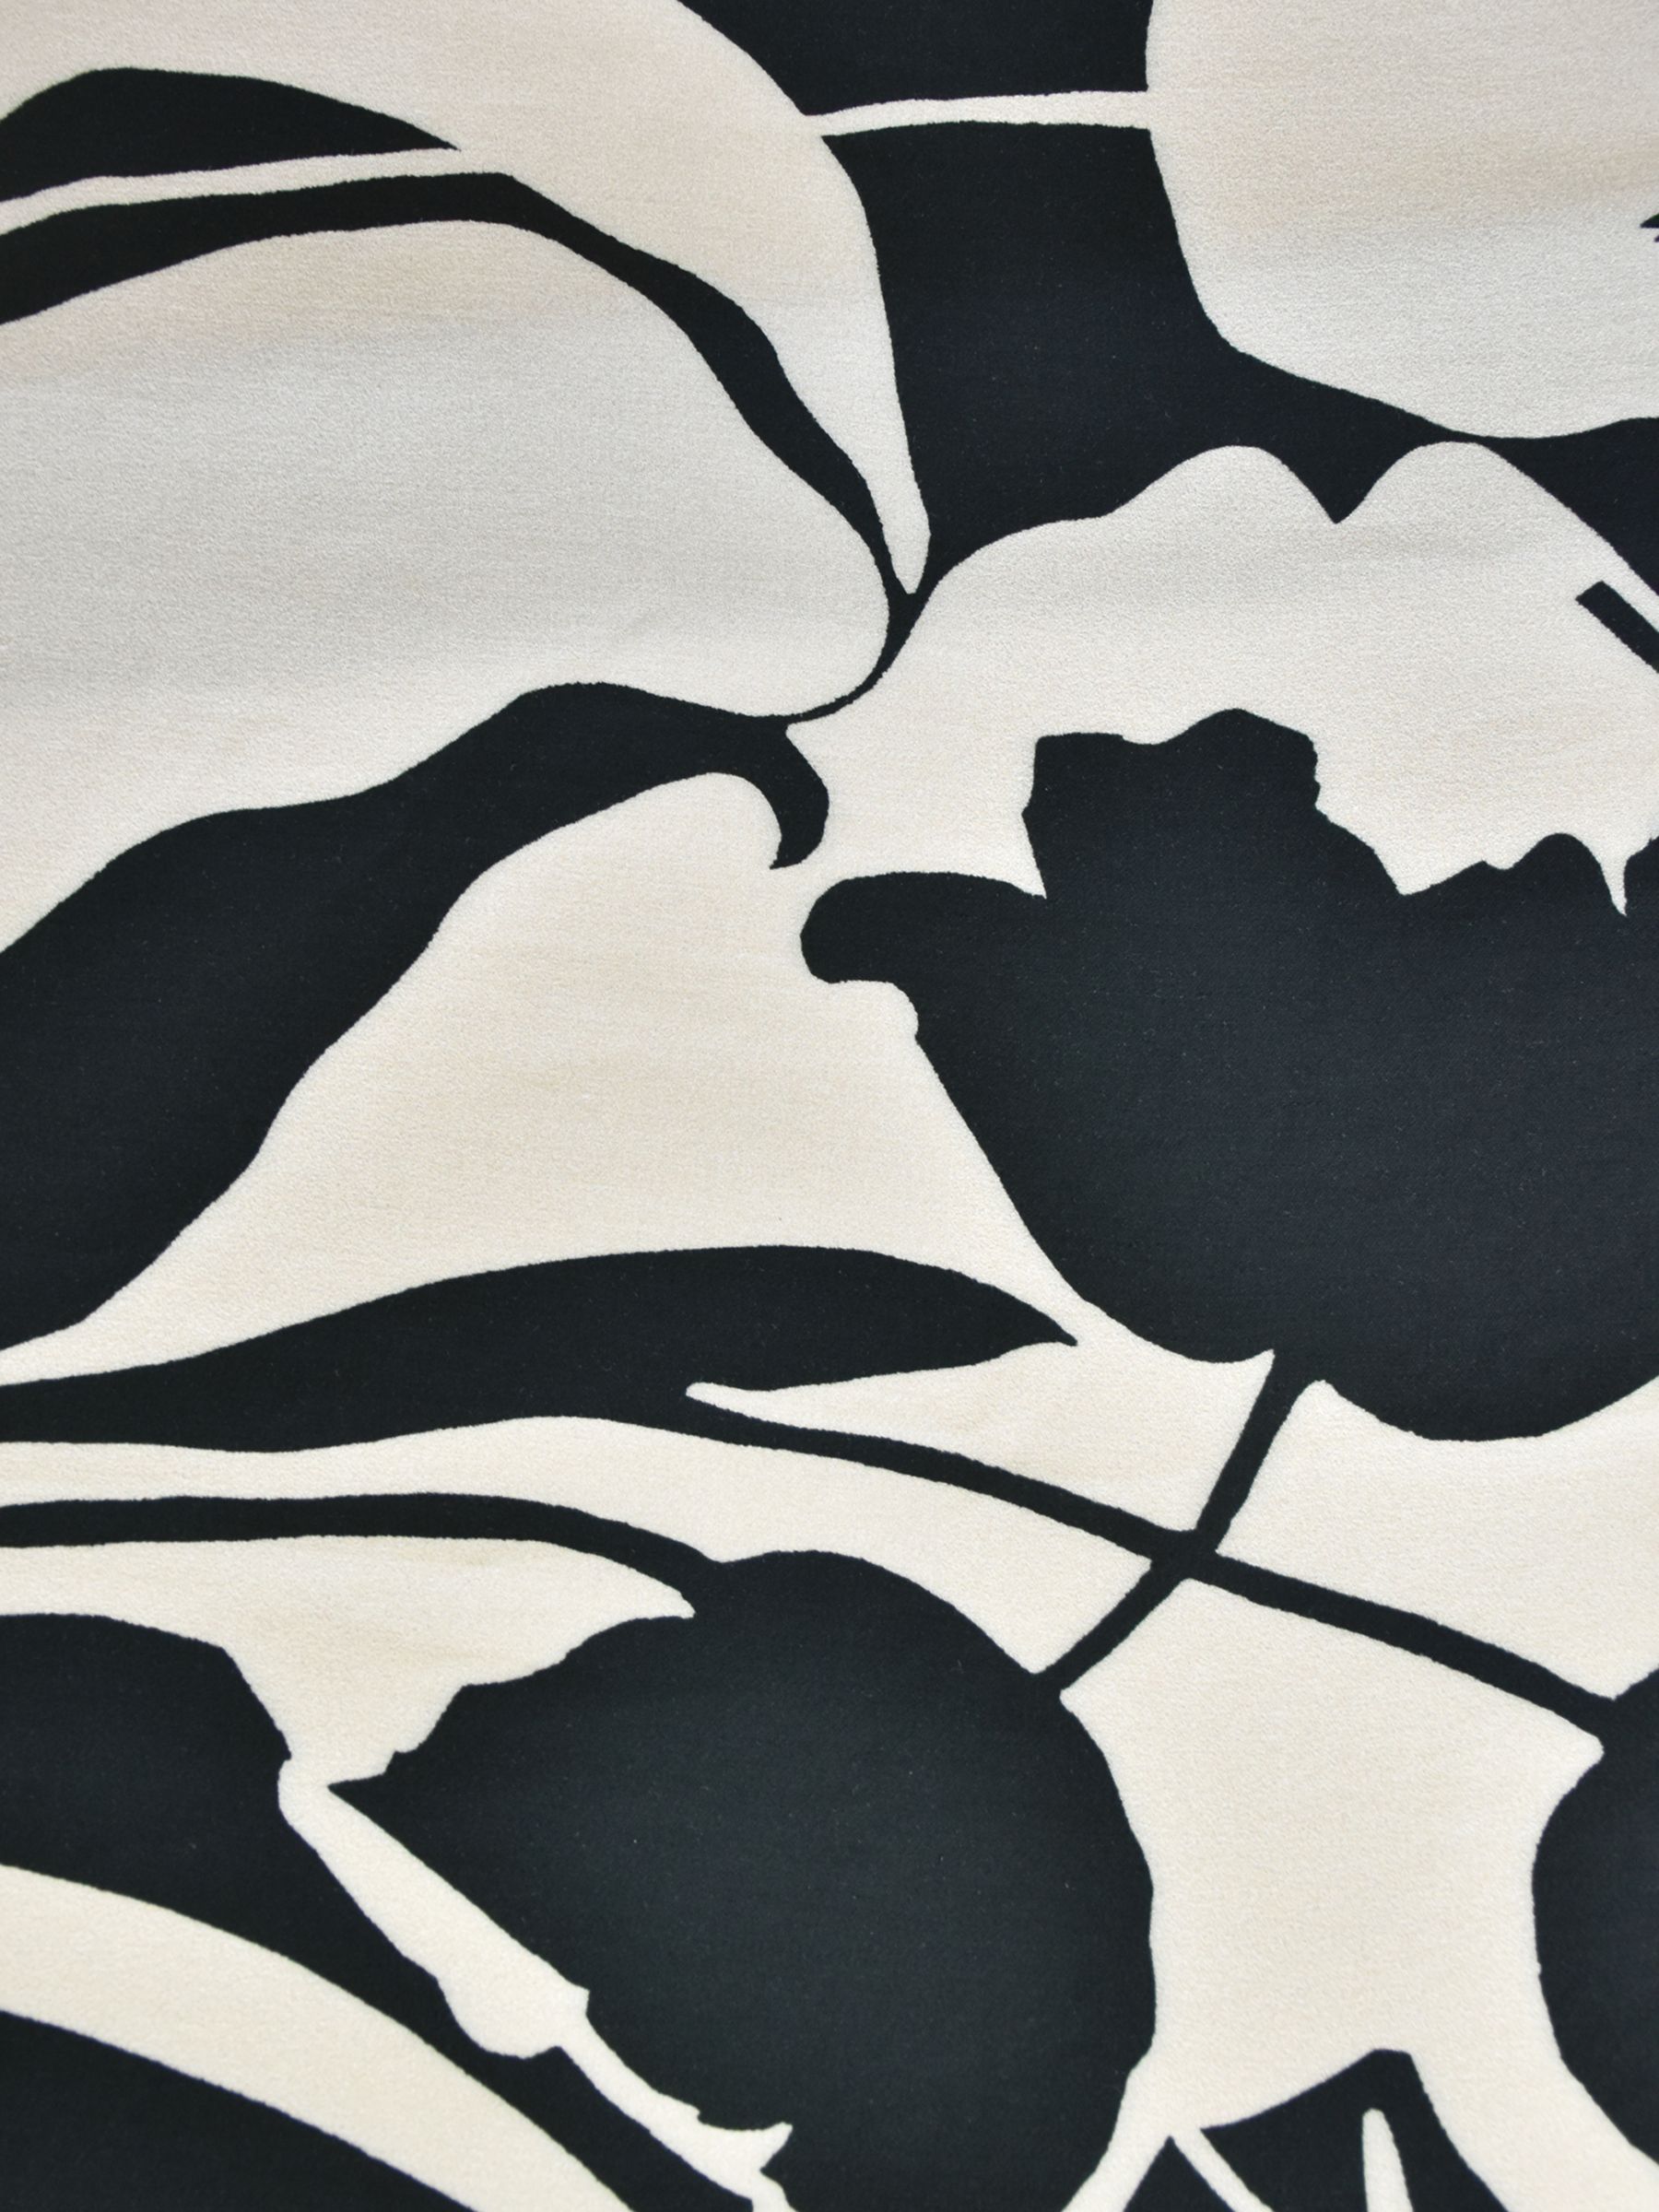 Buy Live Unlimited Curve Mono Floral Print Kimono, Black Online at johnlewis.com